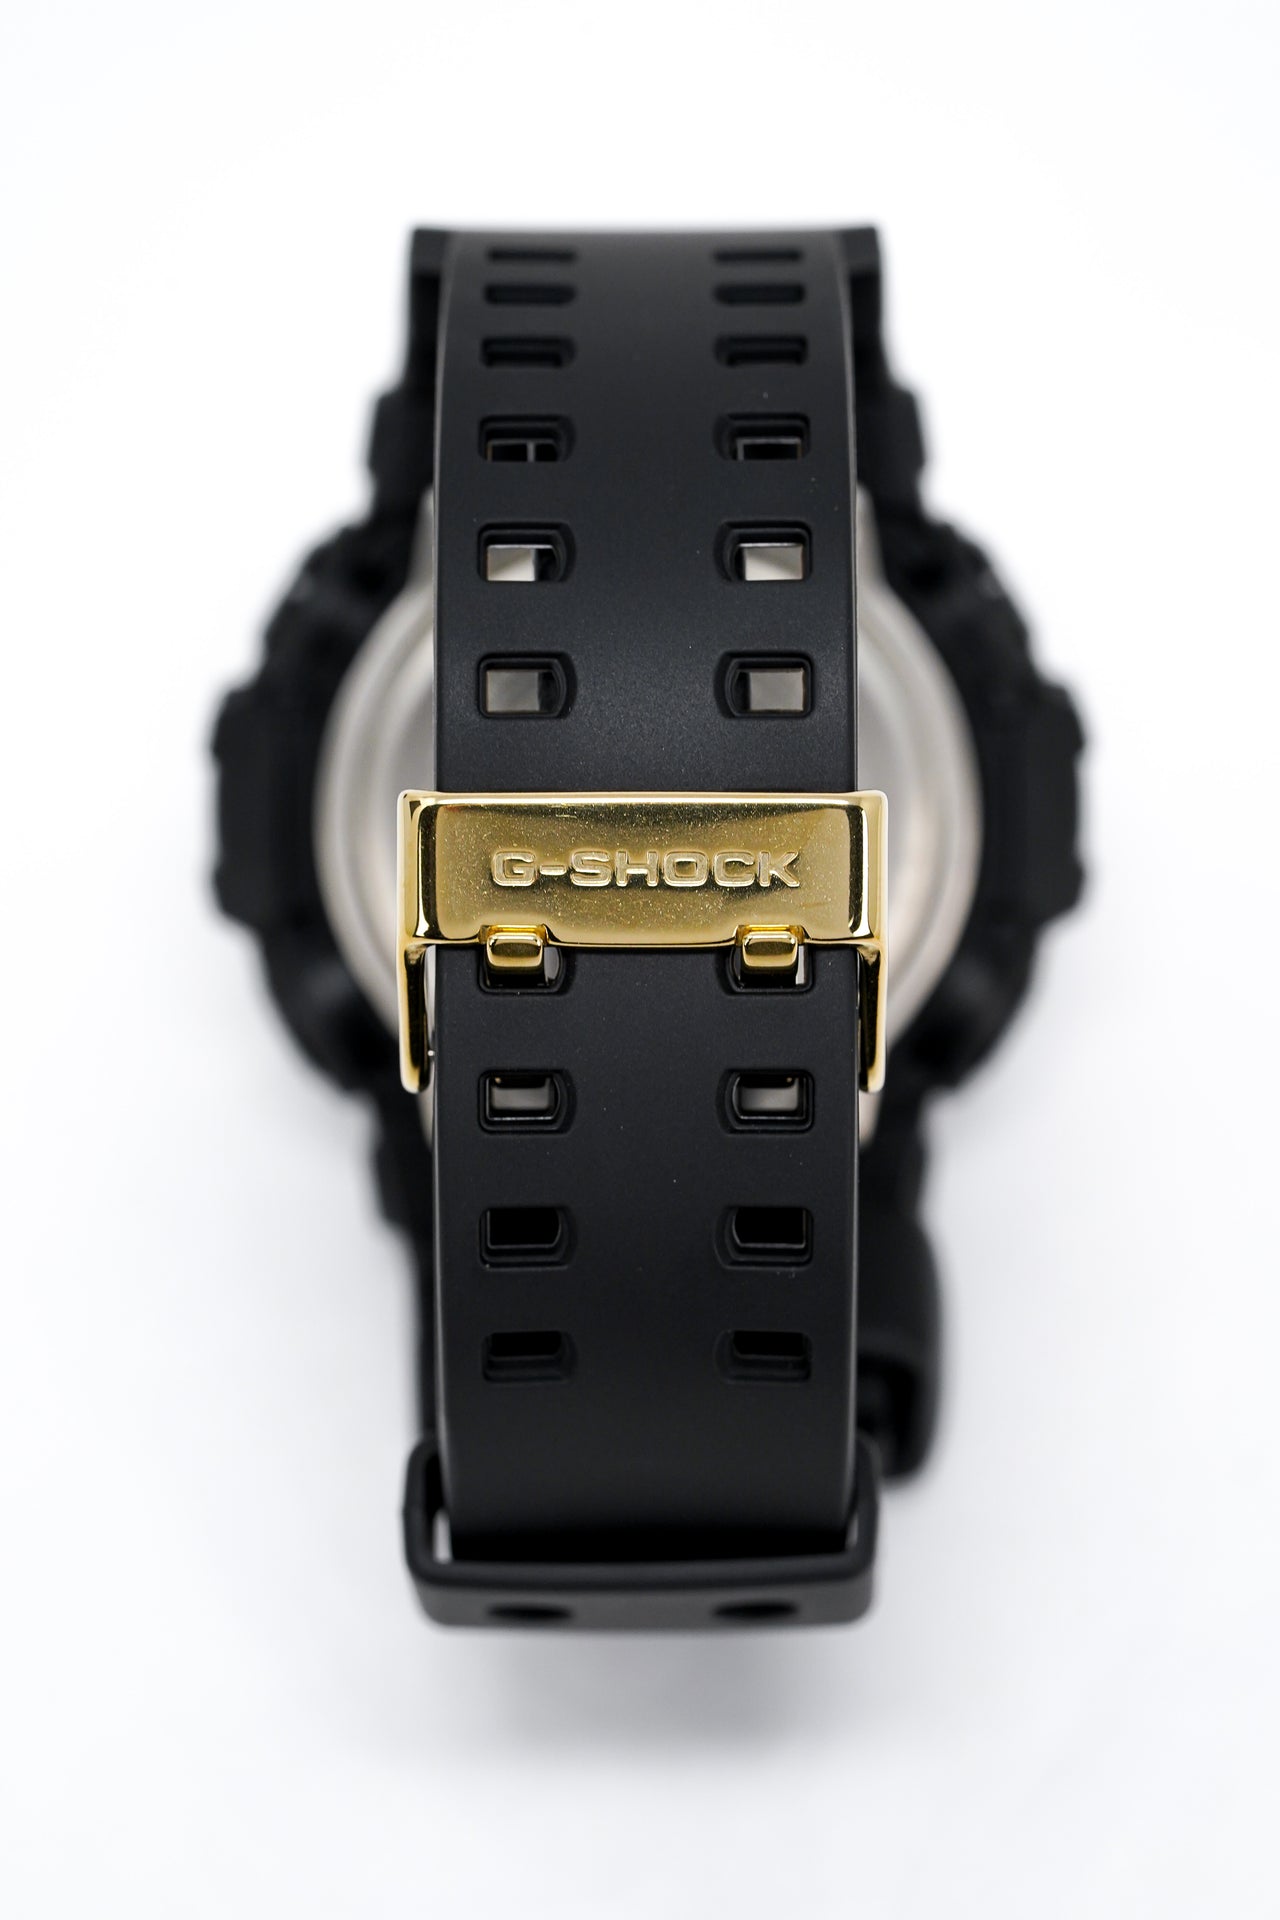 Casio G-Shock Watch Gold/Black GA-710B-1A9ER